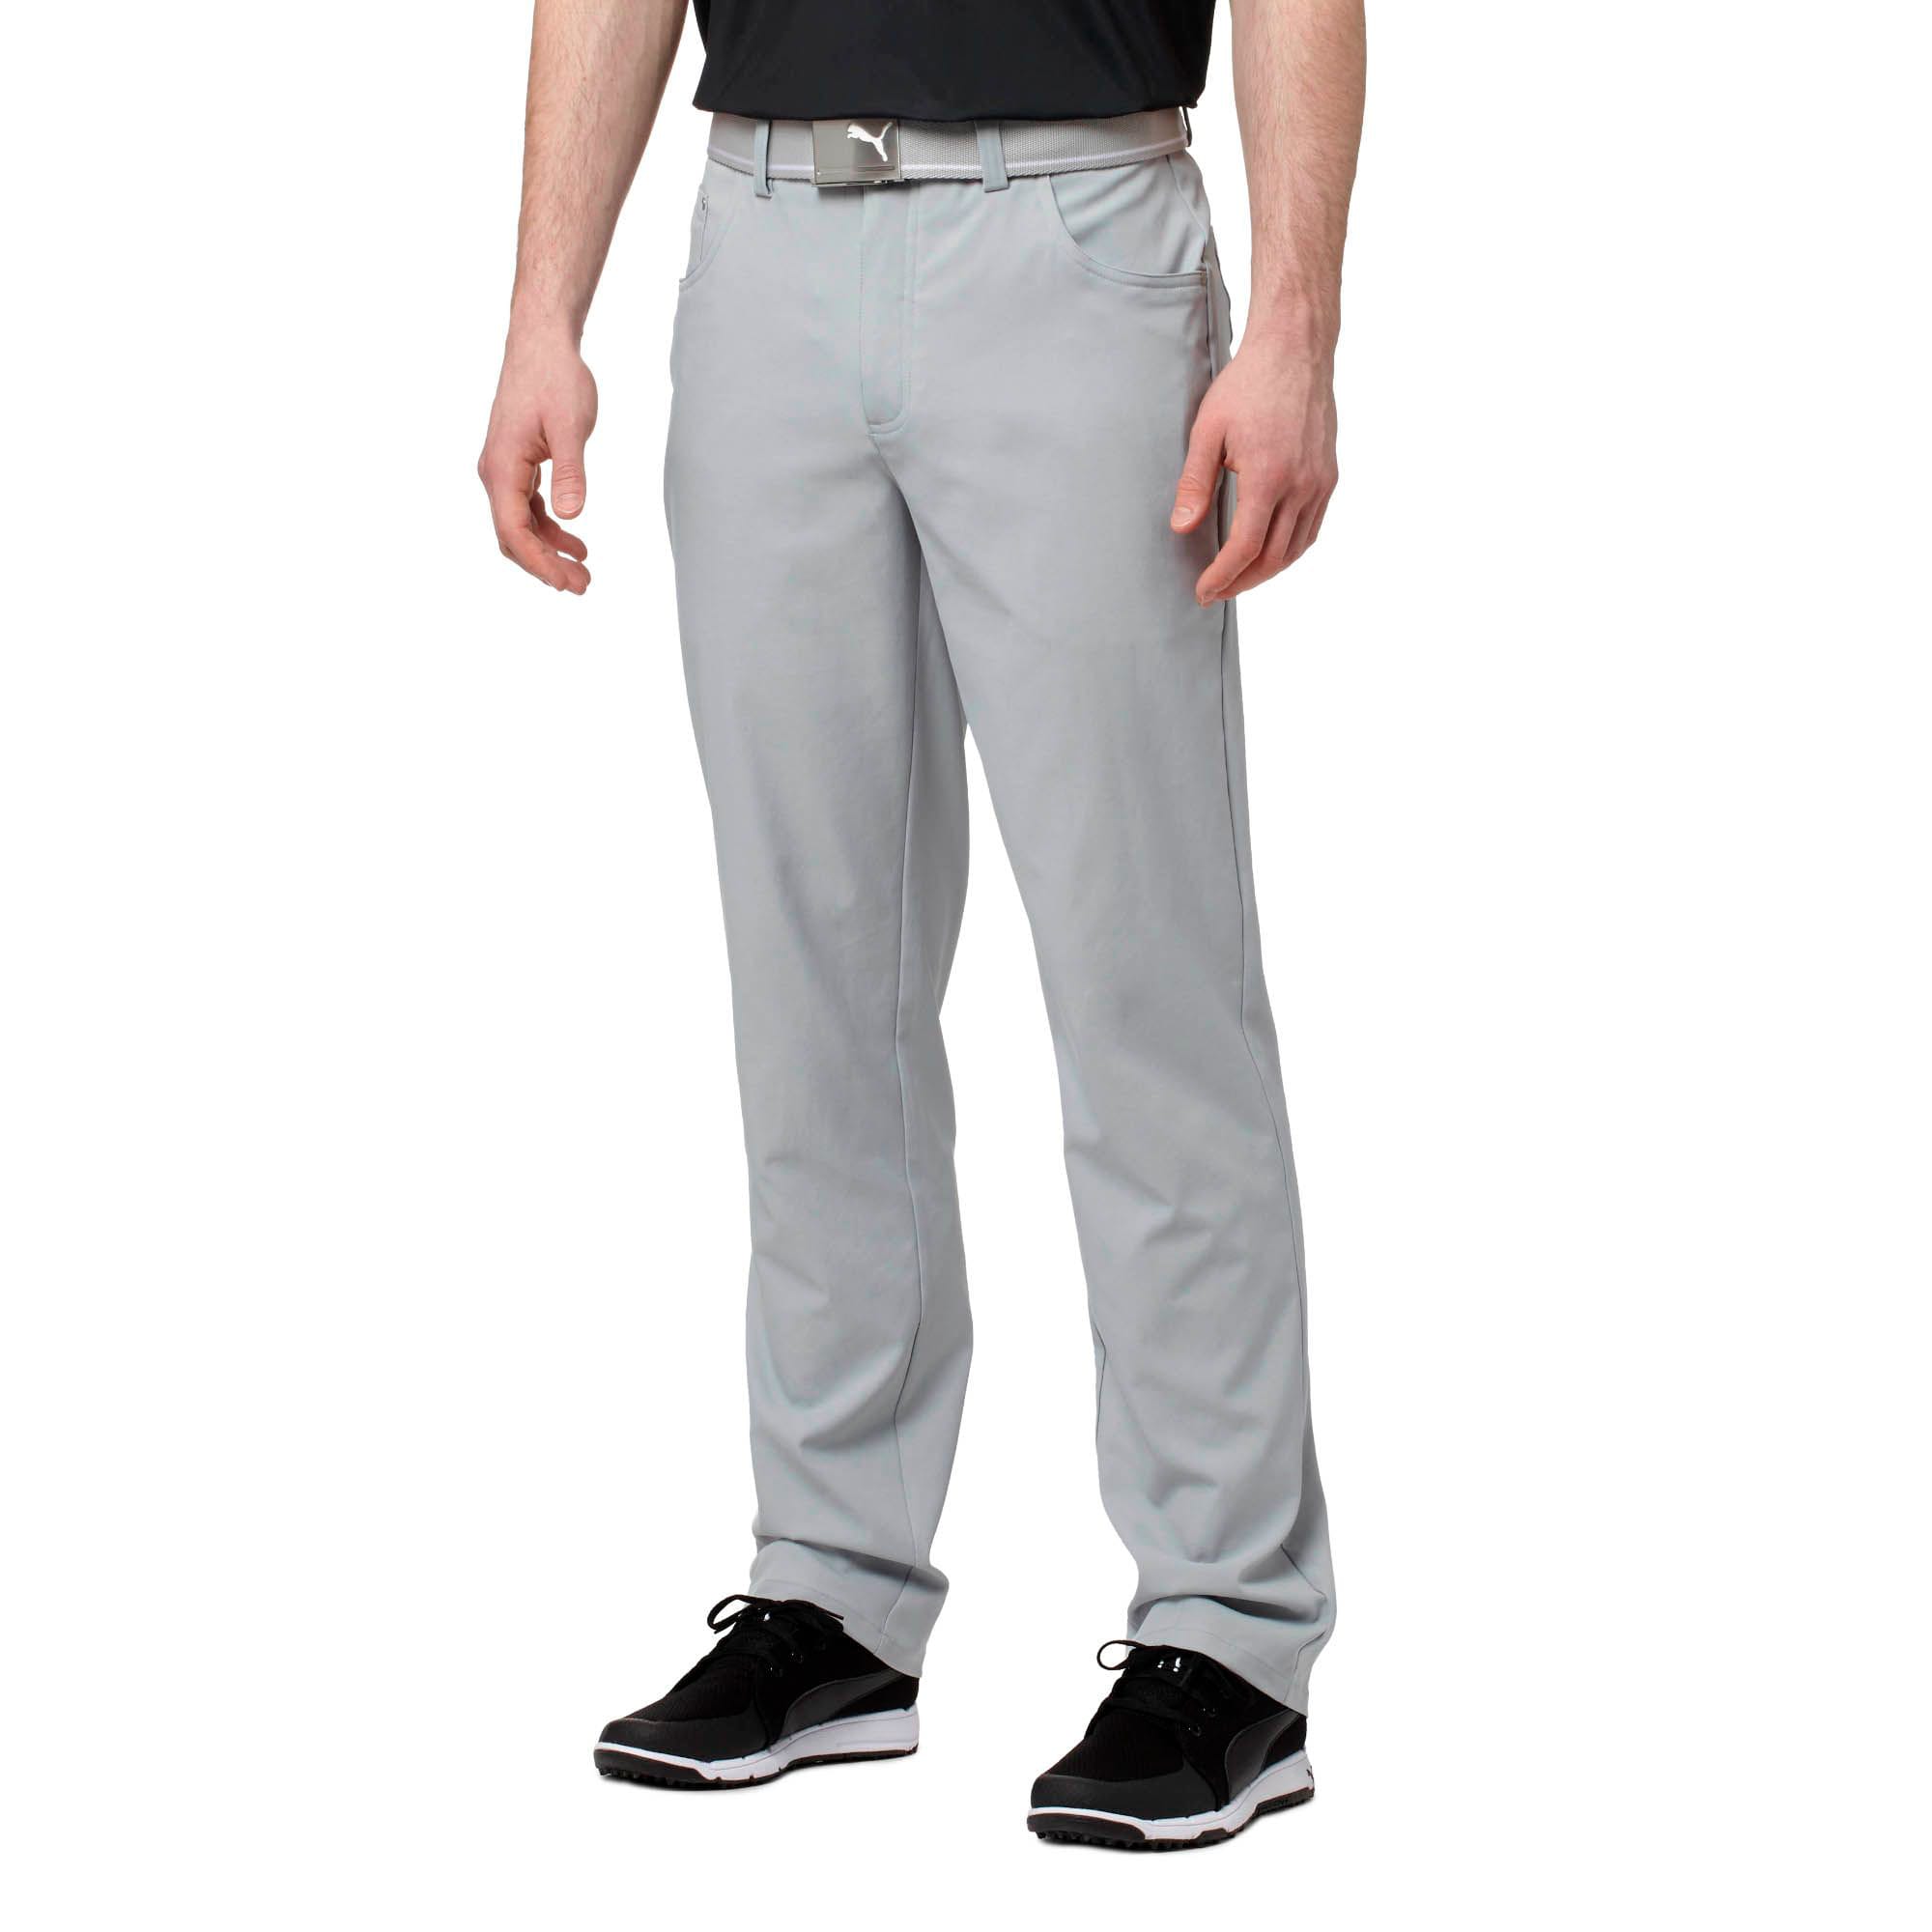 puma 6 pocket golf pants review